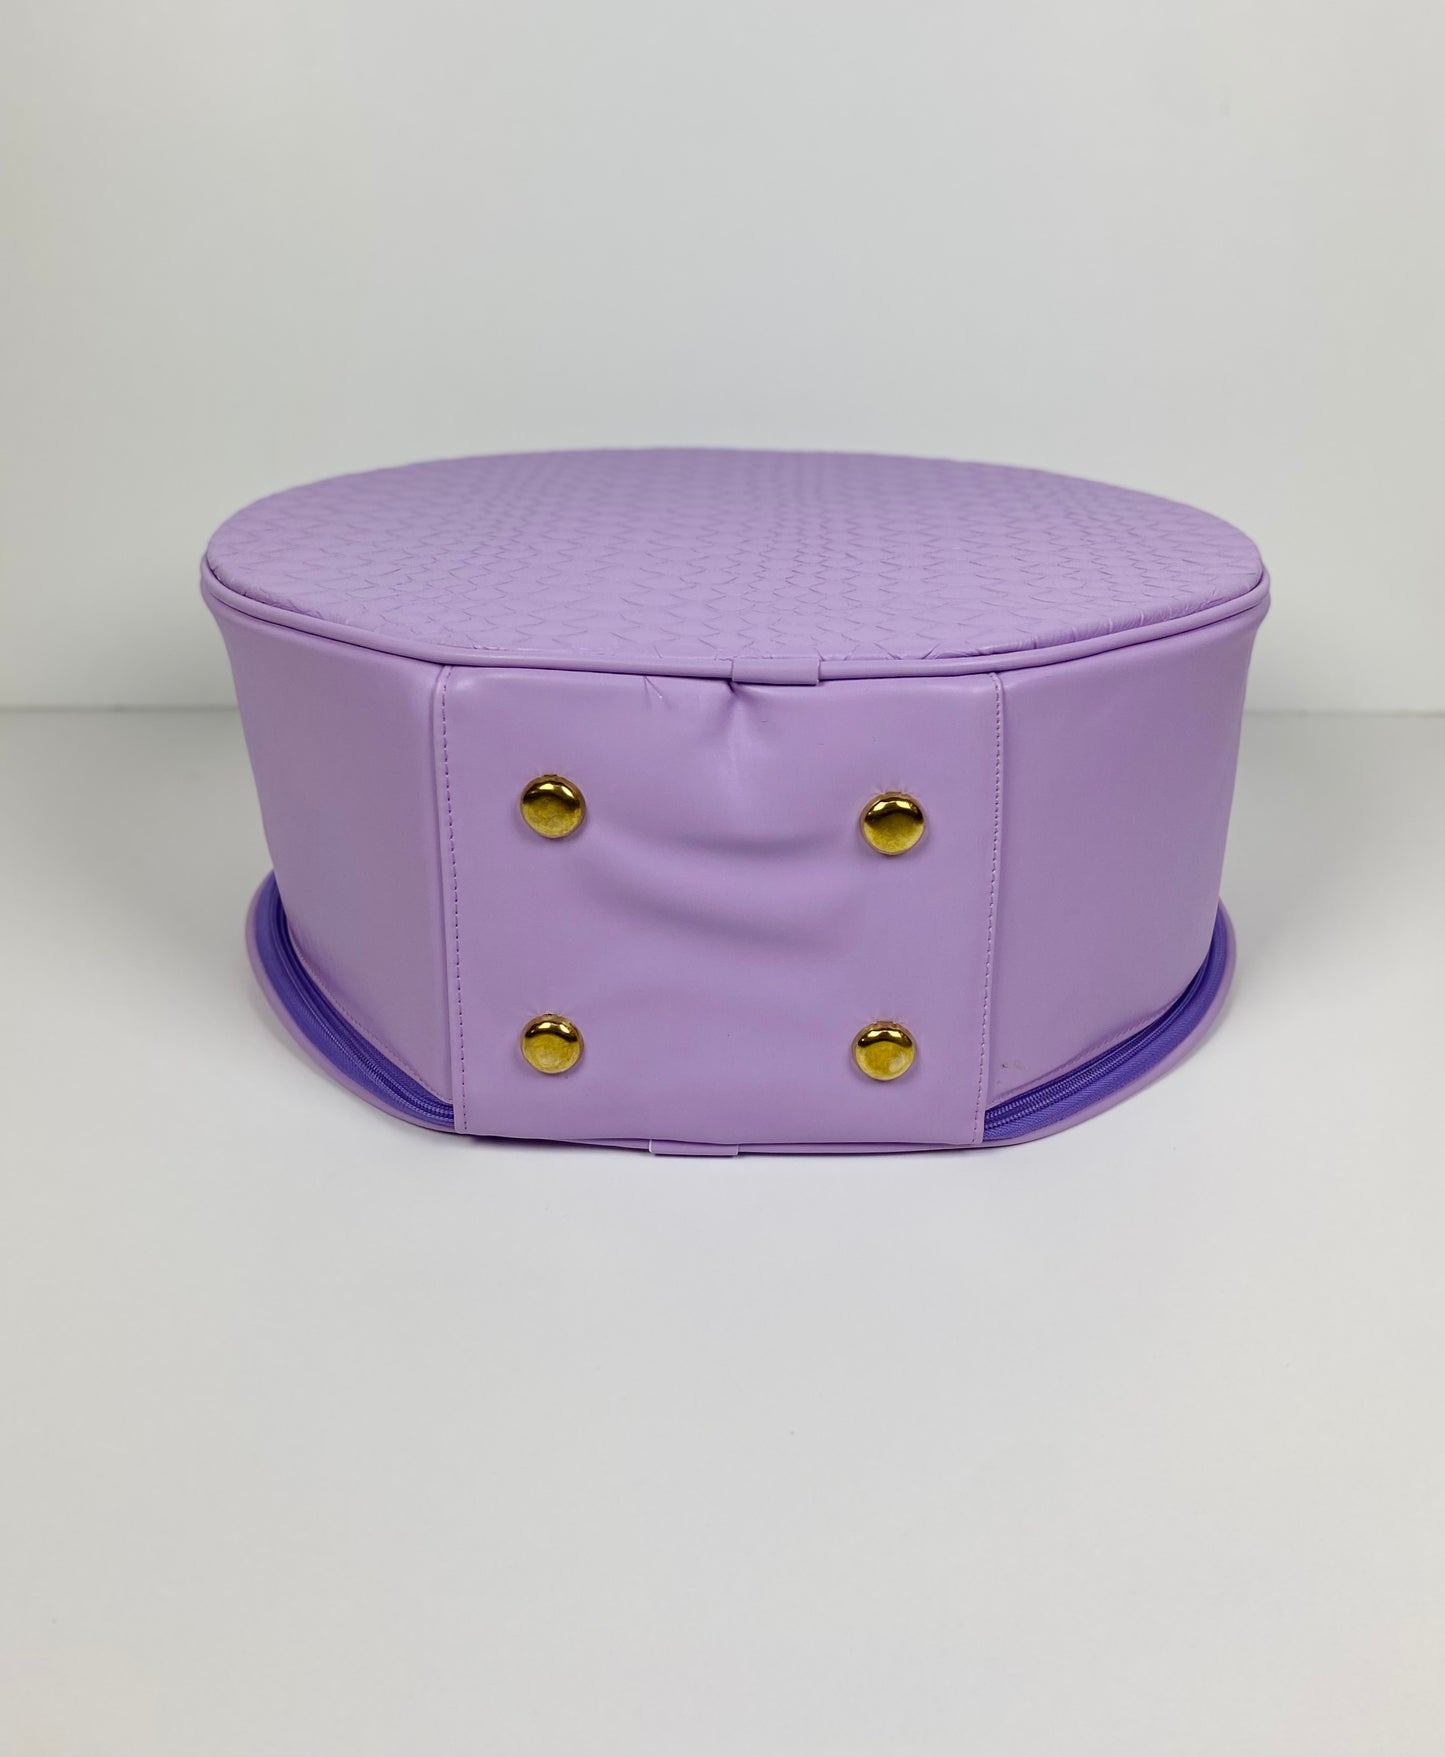 Hat Box Faux Leather Pastel Snake Print - Lavender